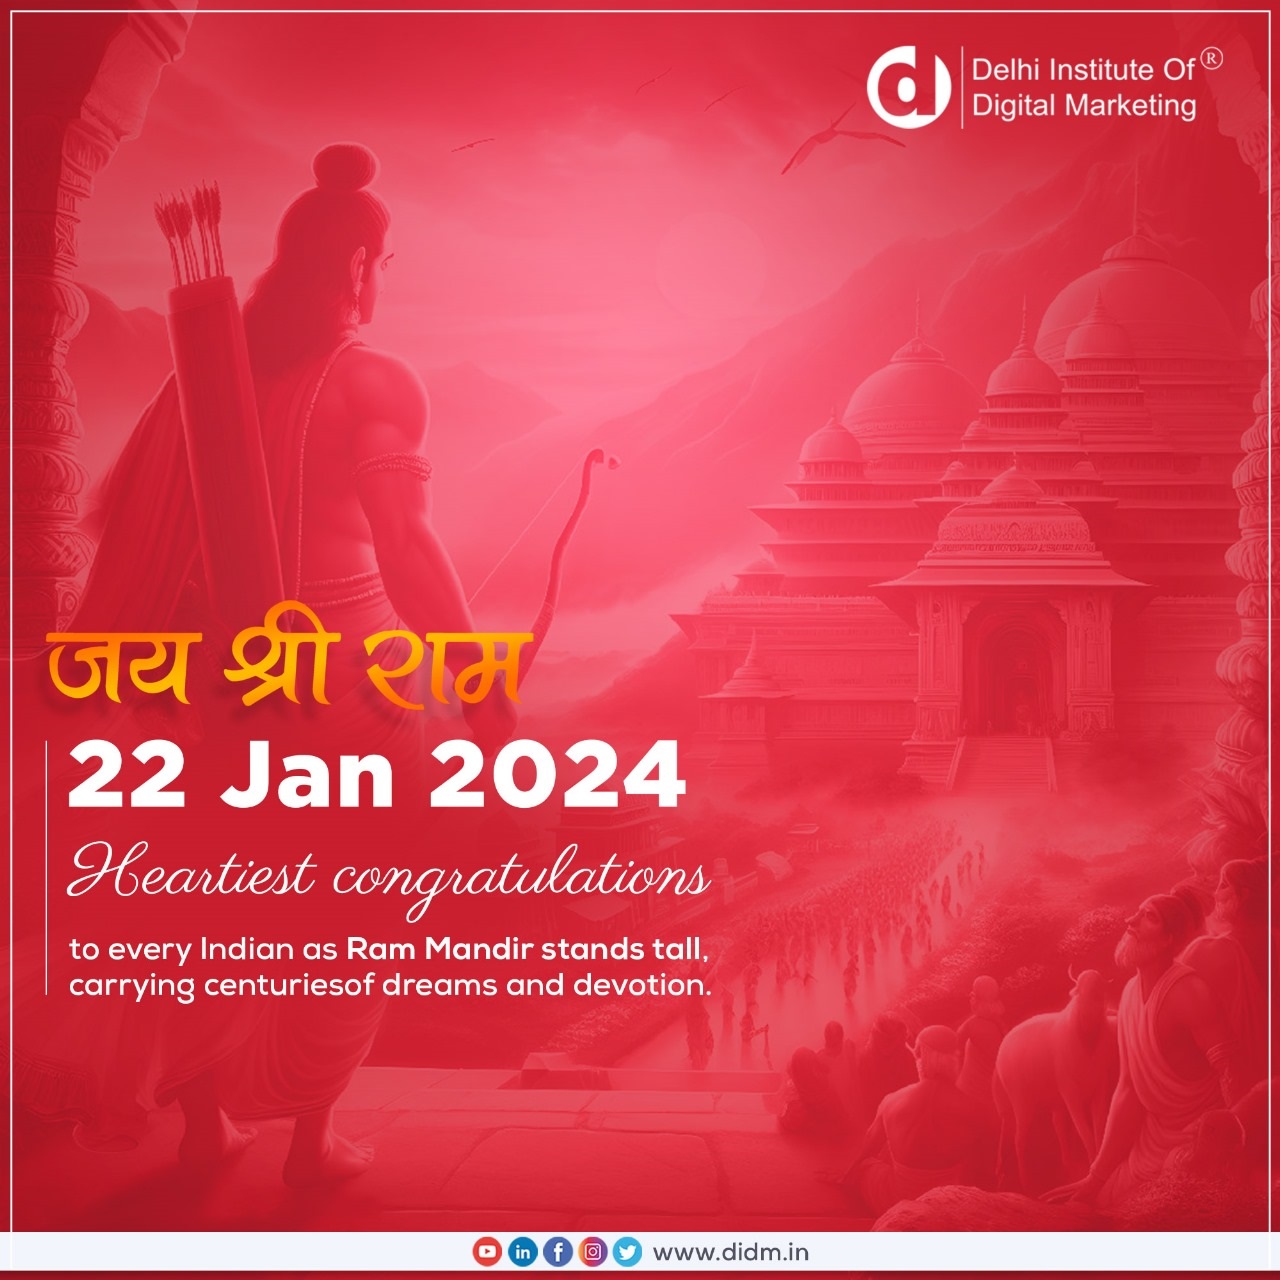 The Inauguration of Ram Mandir in Ayodhya